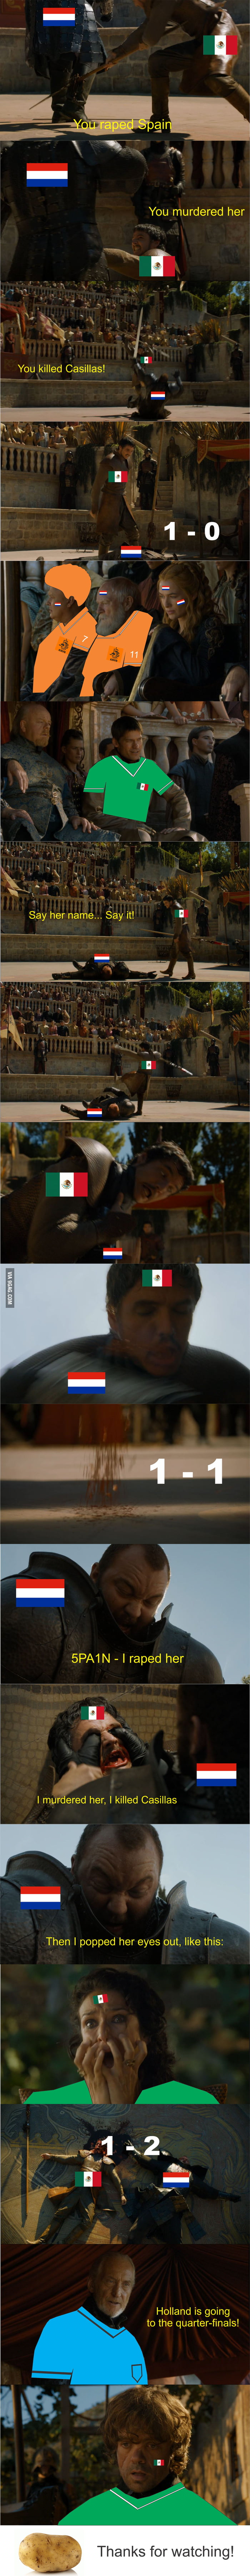 What Nederland - Mexico felt like...